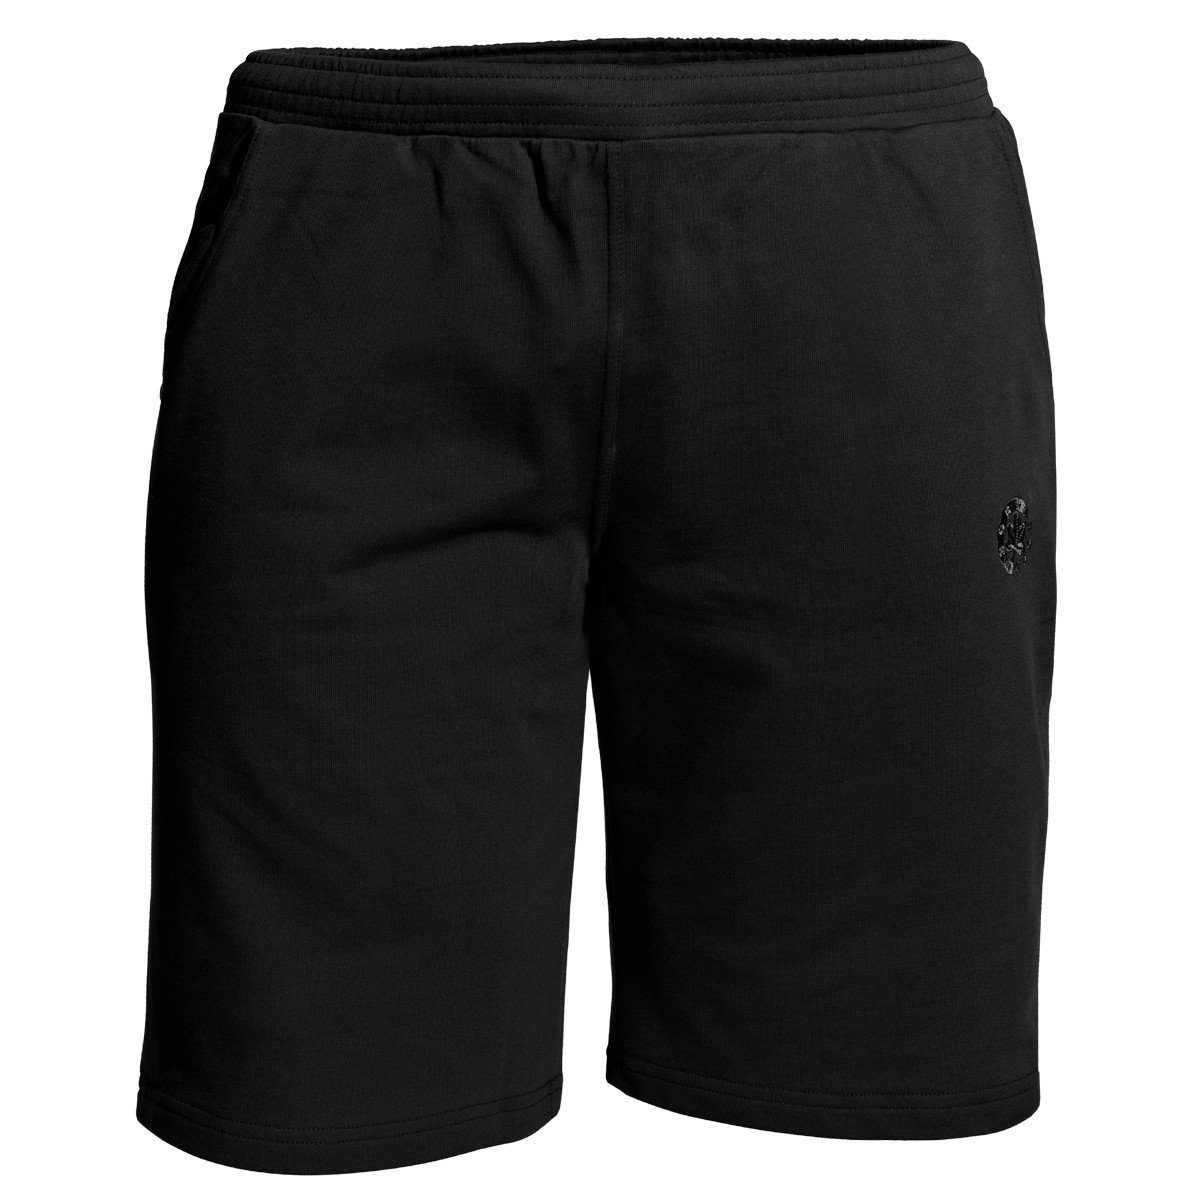 Jogg-Bermudas Herren SPORTSWEAR Übergrößen Ahorn schwarz Joggingbermuda AHORN Sportswear